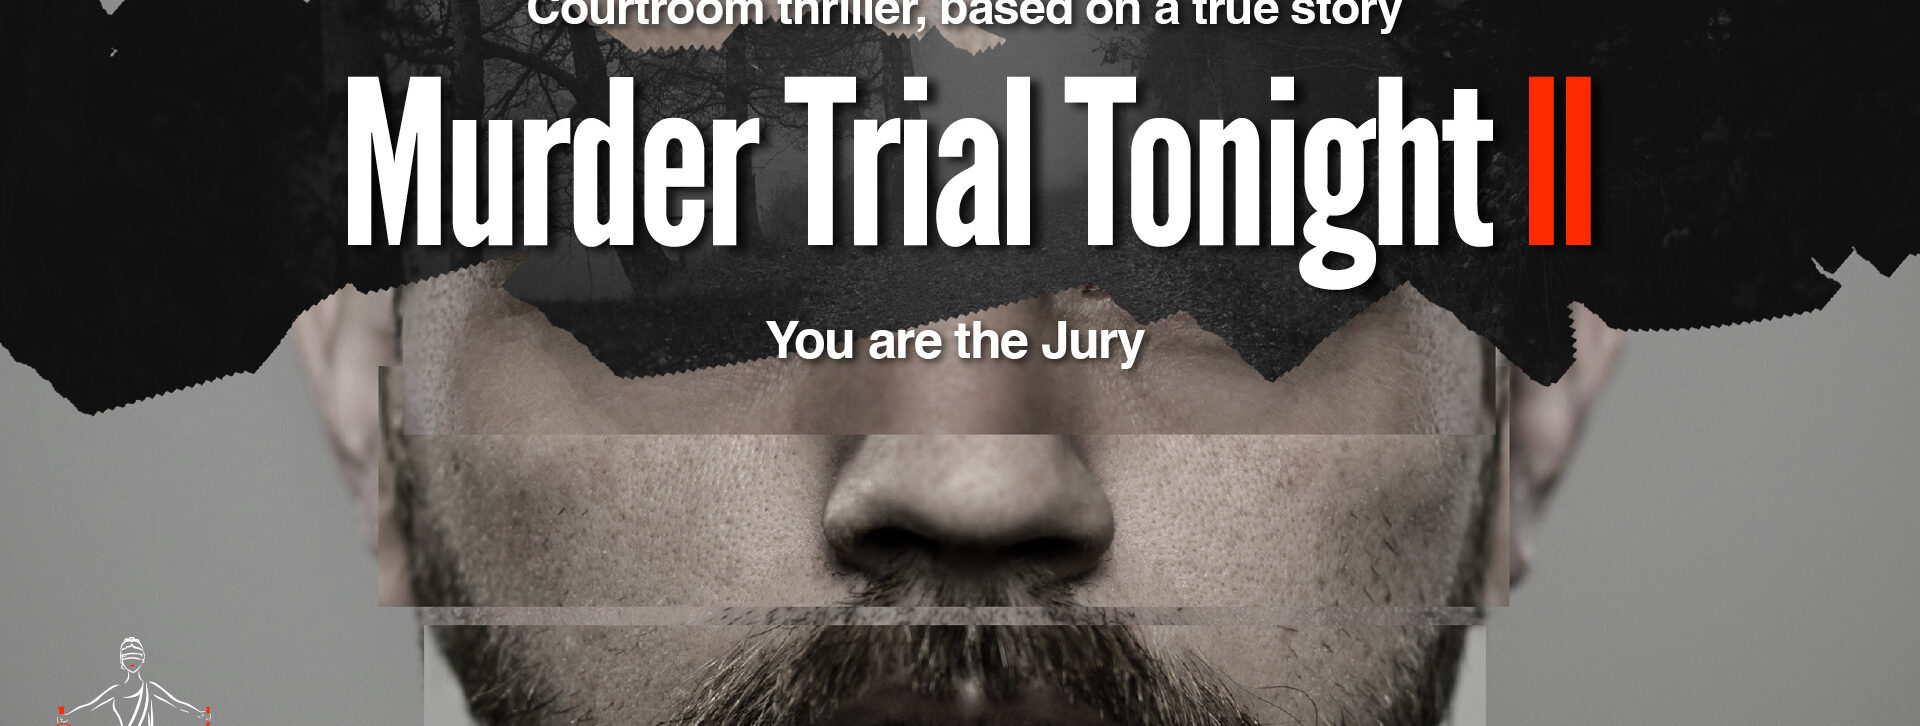 Murder Trial Tonight II